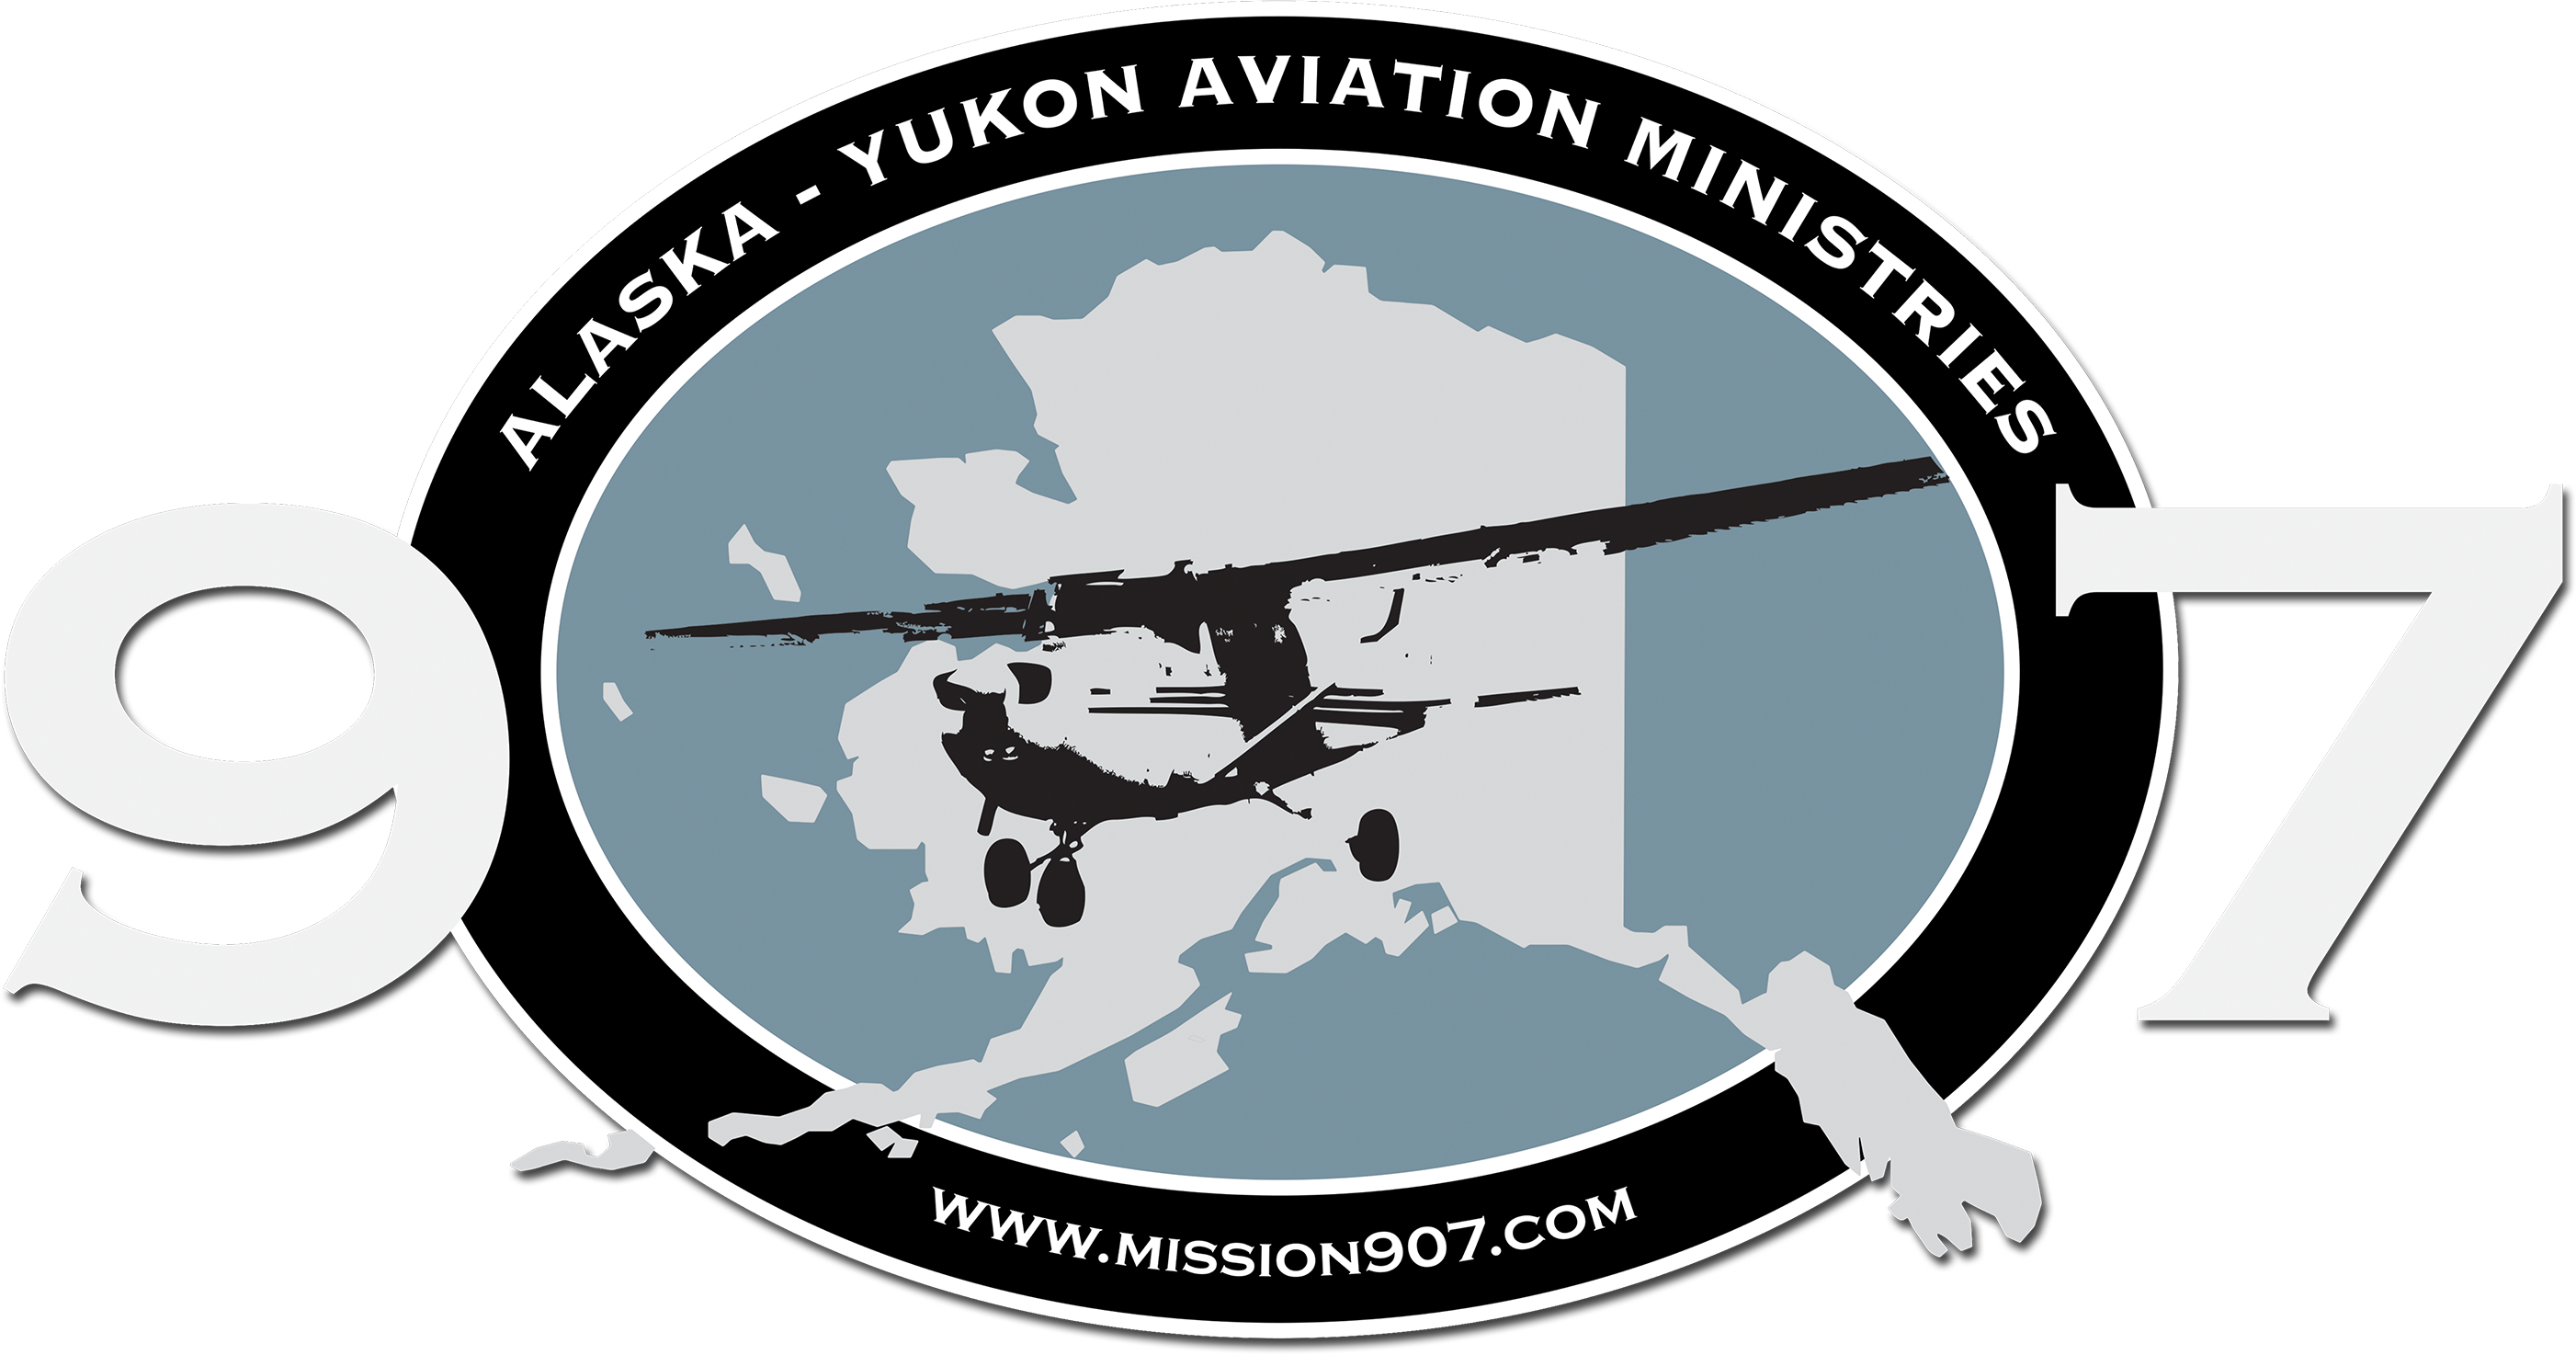 ALASKA-YUKON FLYING MISSIONS